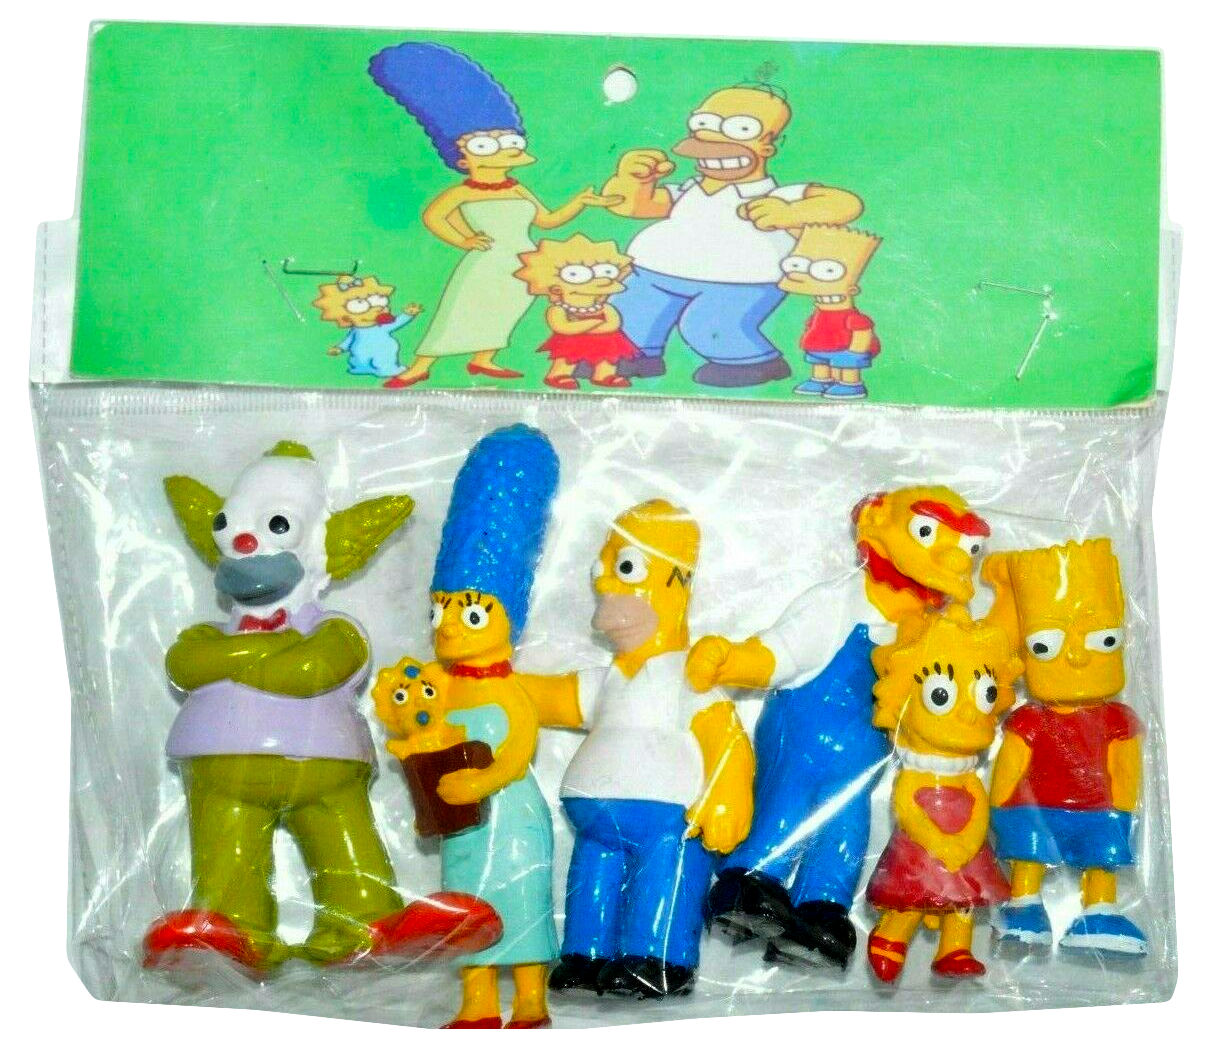 Mexican Bootleg Family Parody Toy Set Type Figures